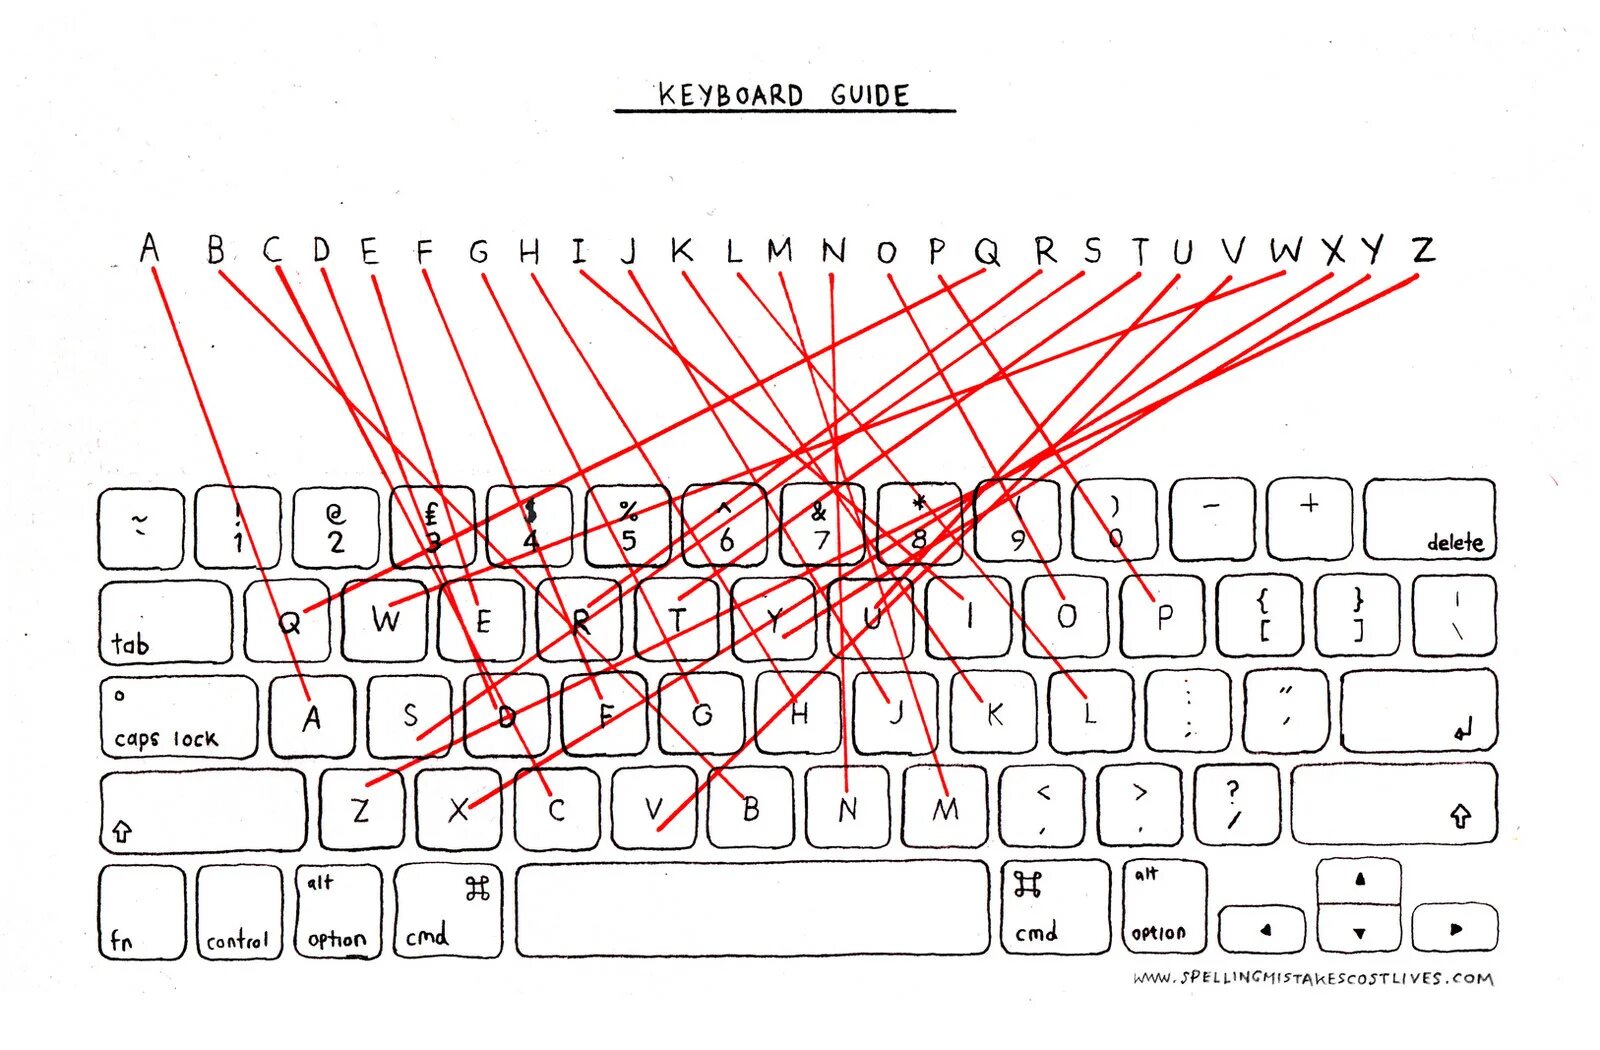 Keyboard Guide. Web вкладка клавиатуры. Naya create Keyboard. Bobby Keyboard. Скрипт нажатие клавиш